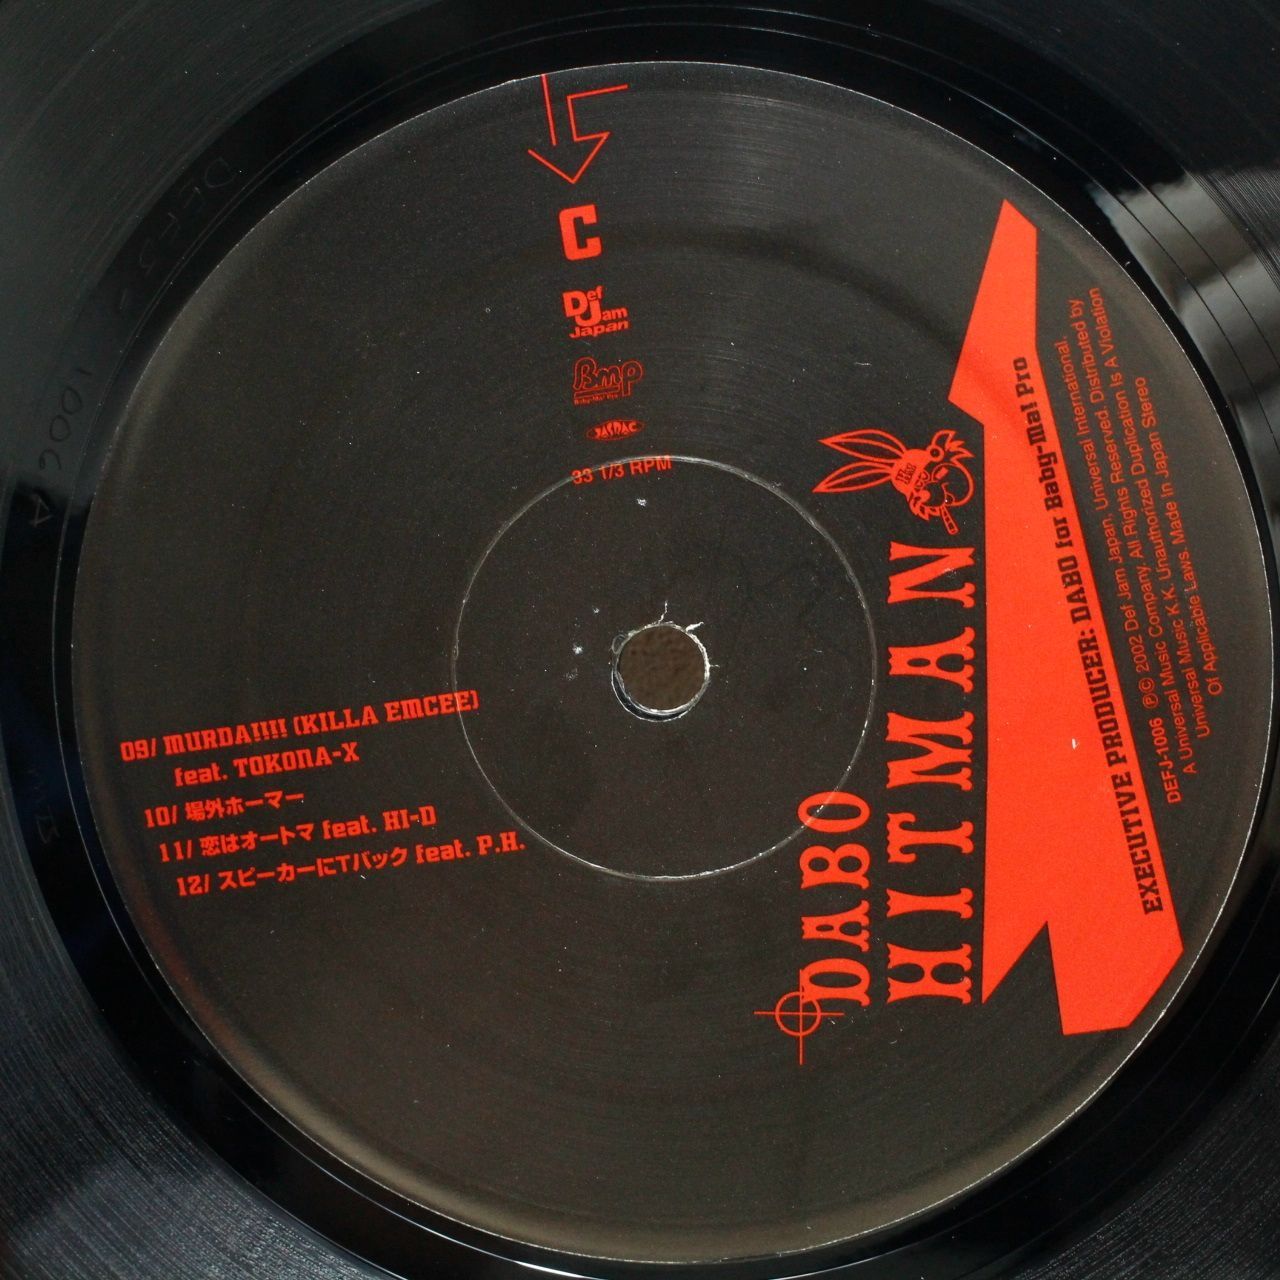 Dabo / Hitman レコード - メルカリ